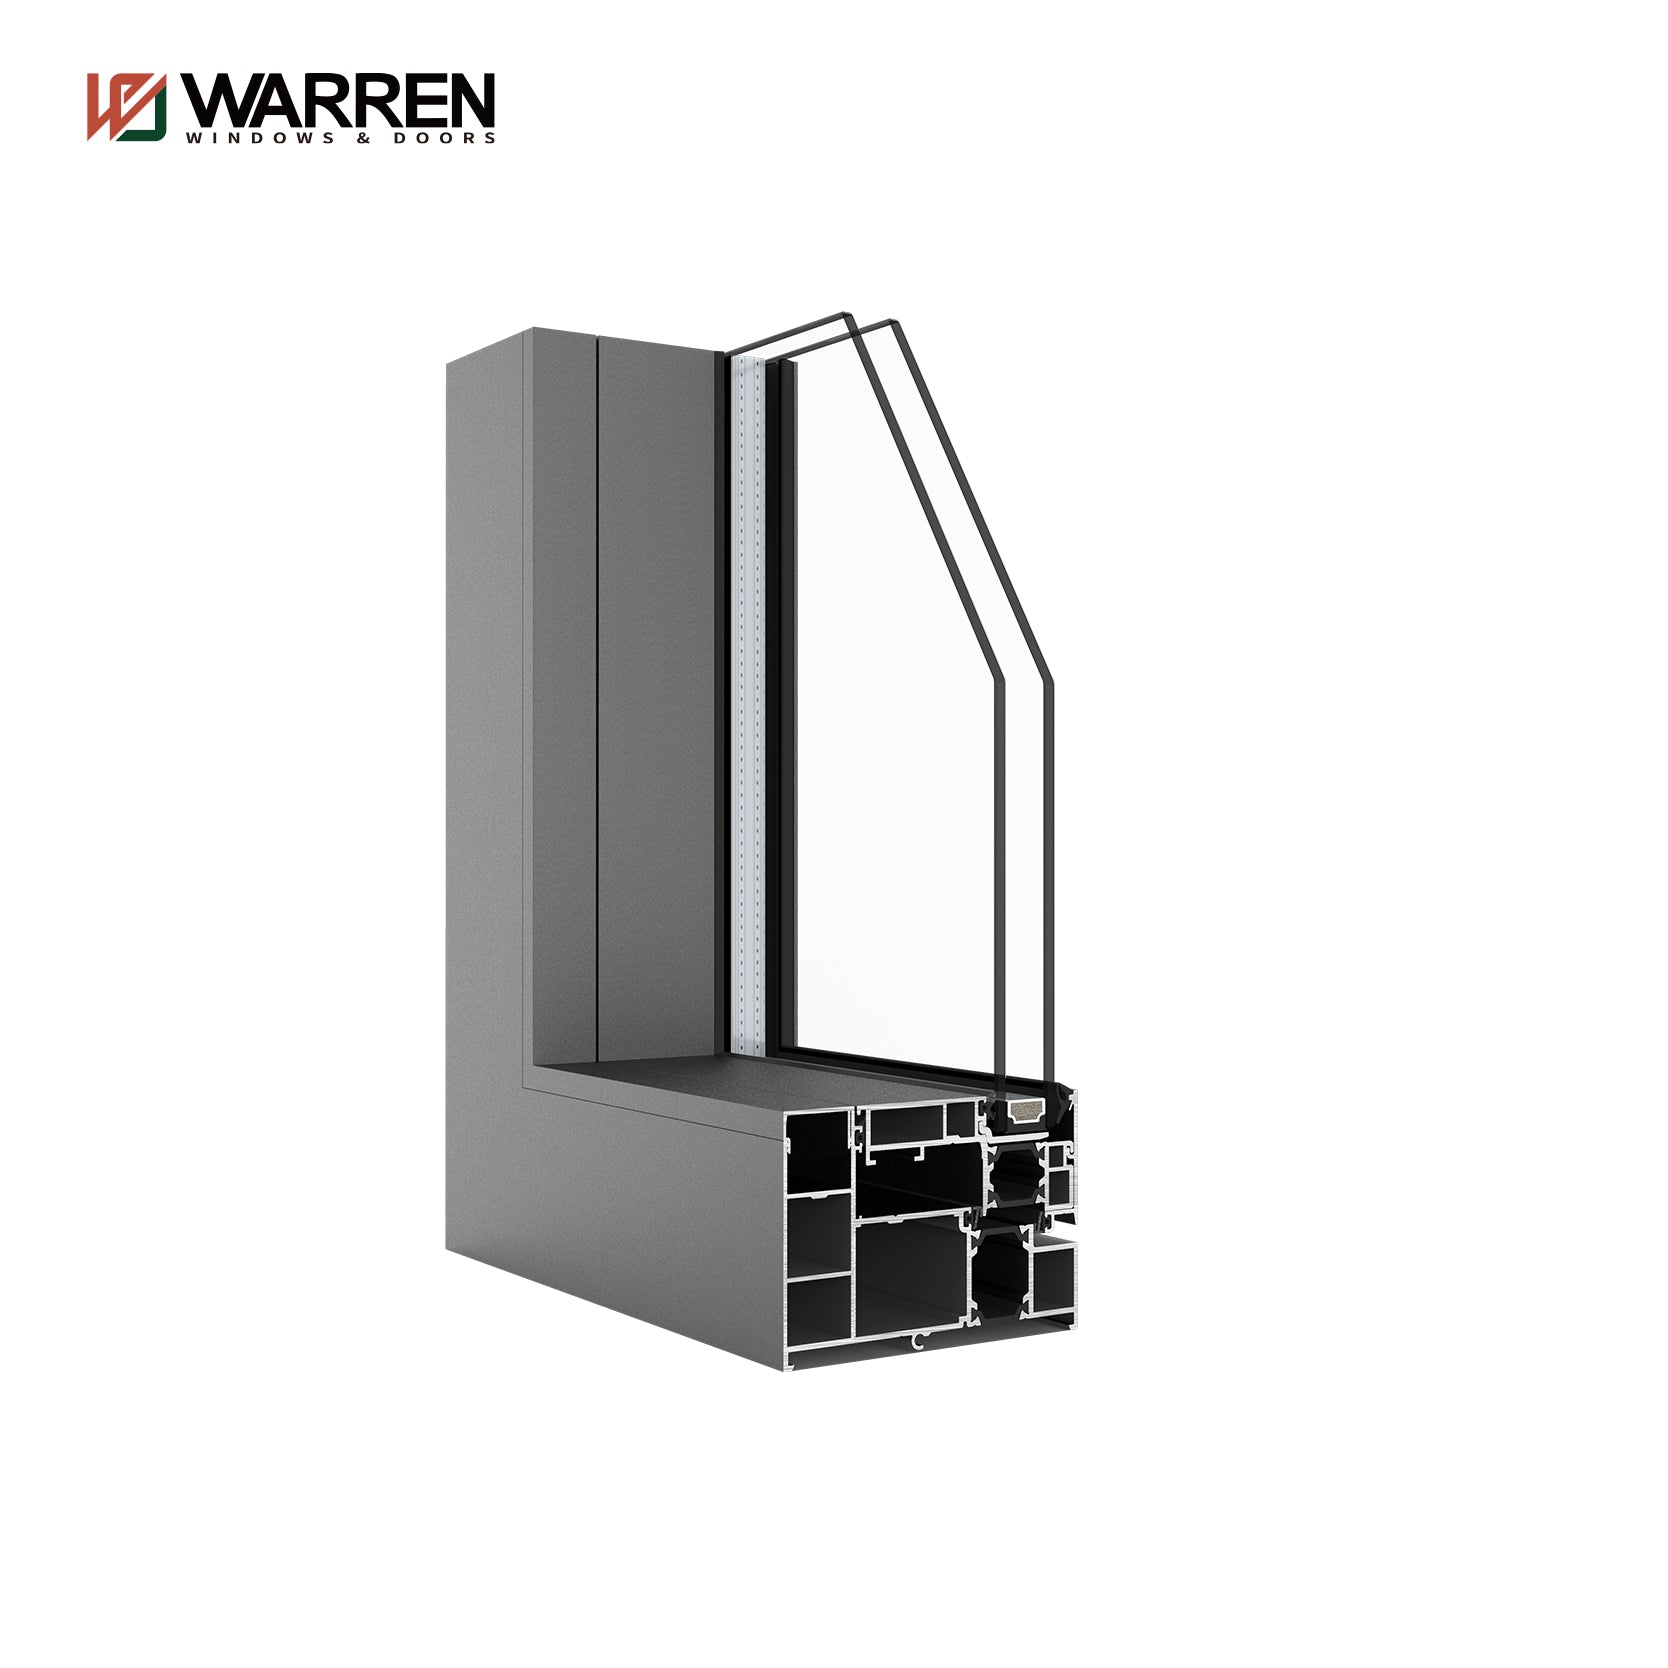 Warren New Promotion  Hot Style  Modern Popular Aluminum Soundproof Casement Window  Double Glass Windows